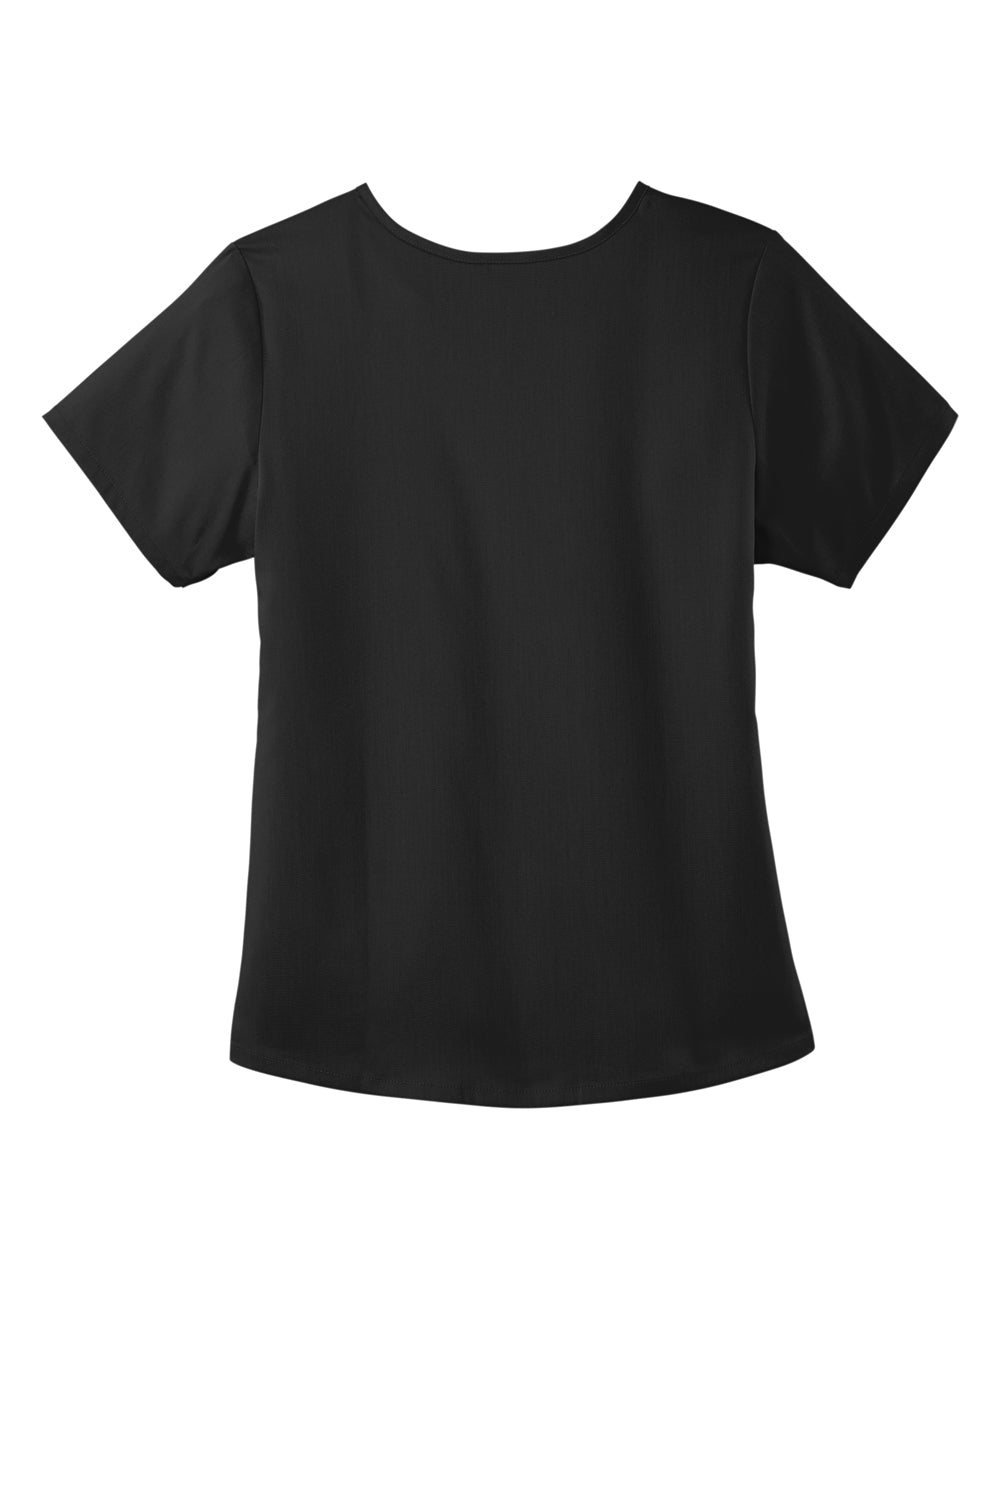 Wonderwink WW4268 Premiere Flex Short Sleeve V-Neck Mock Wrap Shirt Black Flat Back